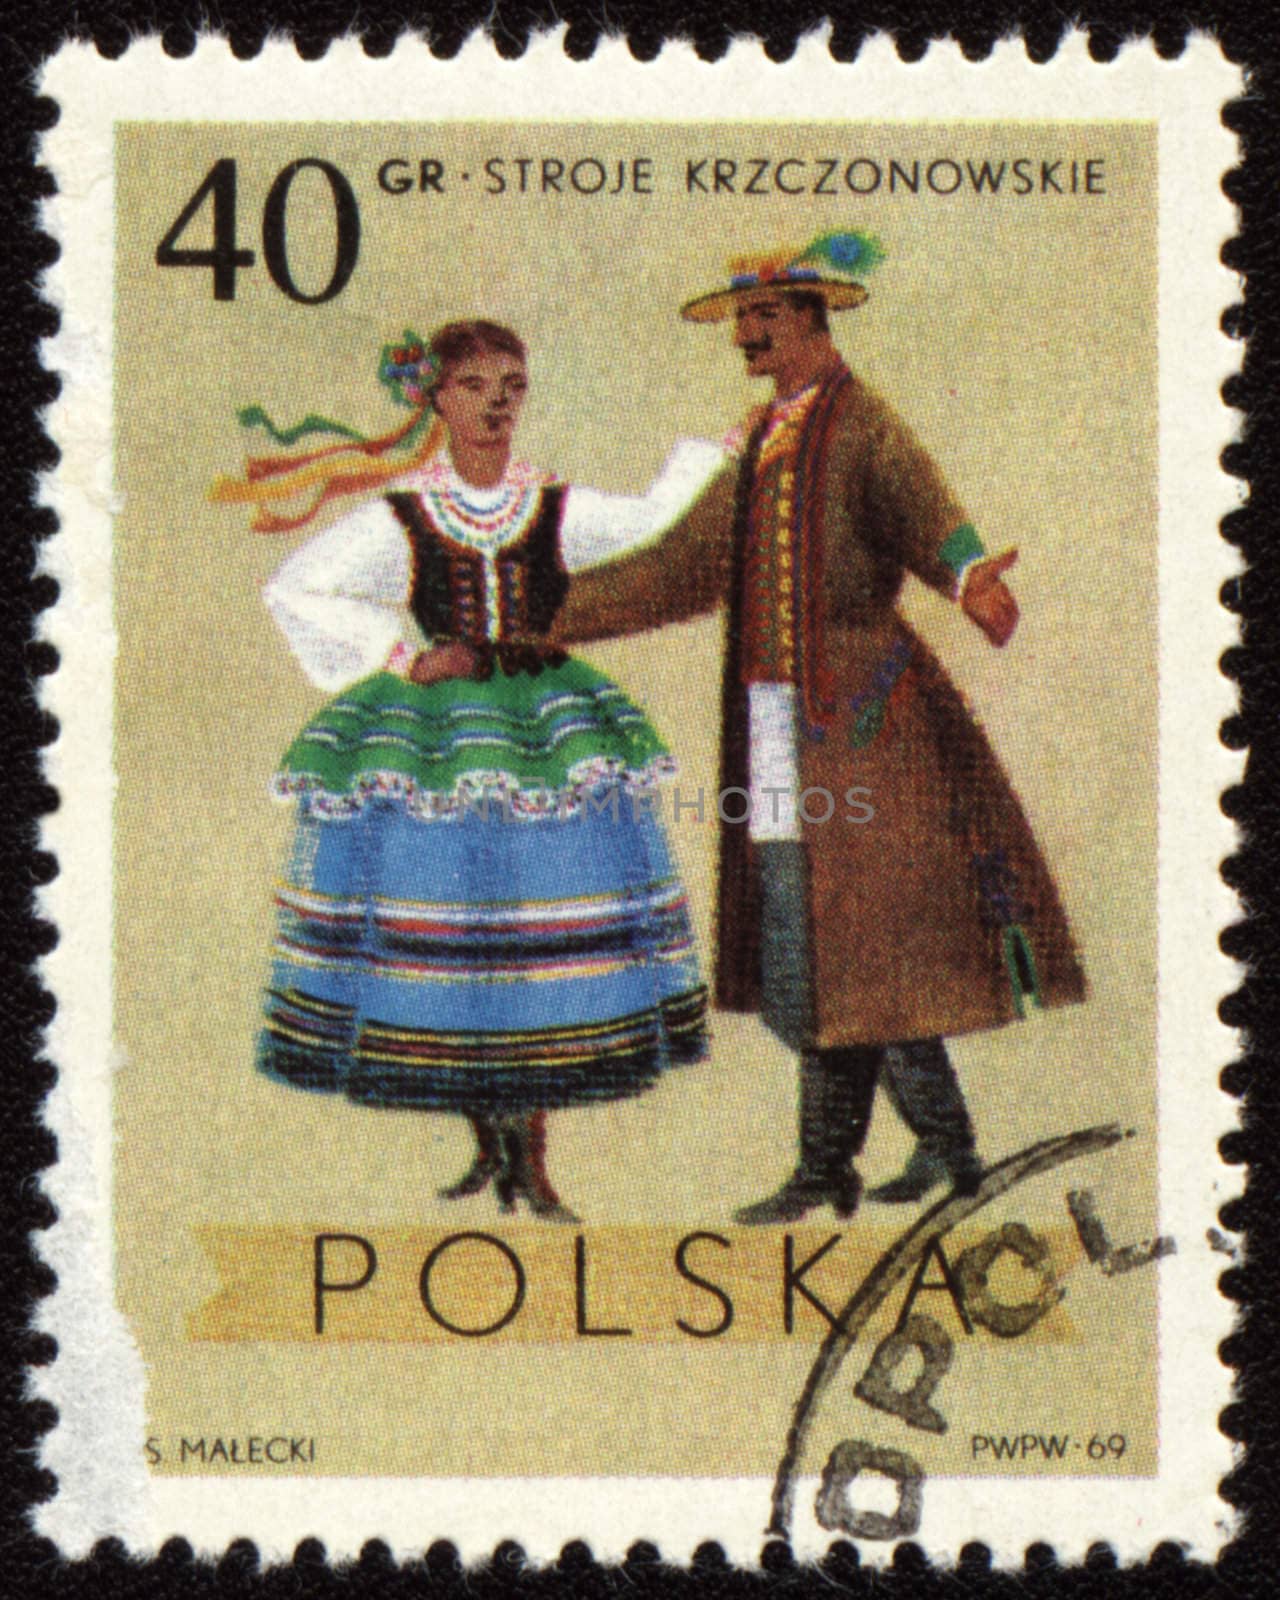 POLAND - CIRCA 1969: A stamp printed in Poland shows polish folk dancers in costumes from Krzczonowskie region, series, circa 1969